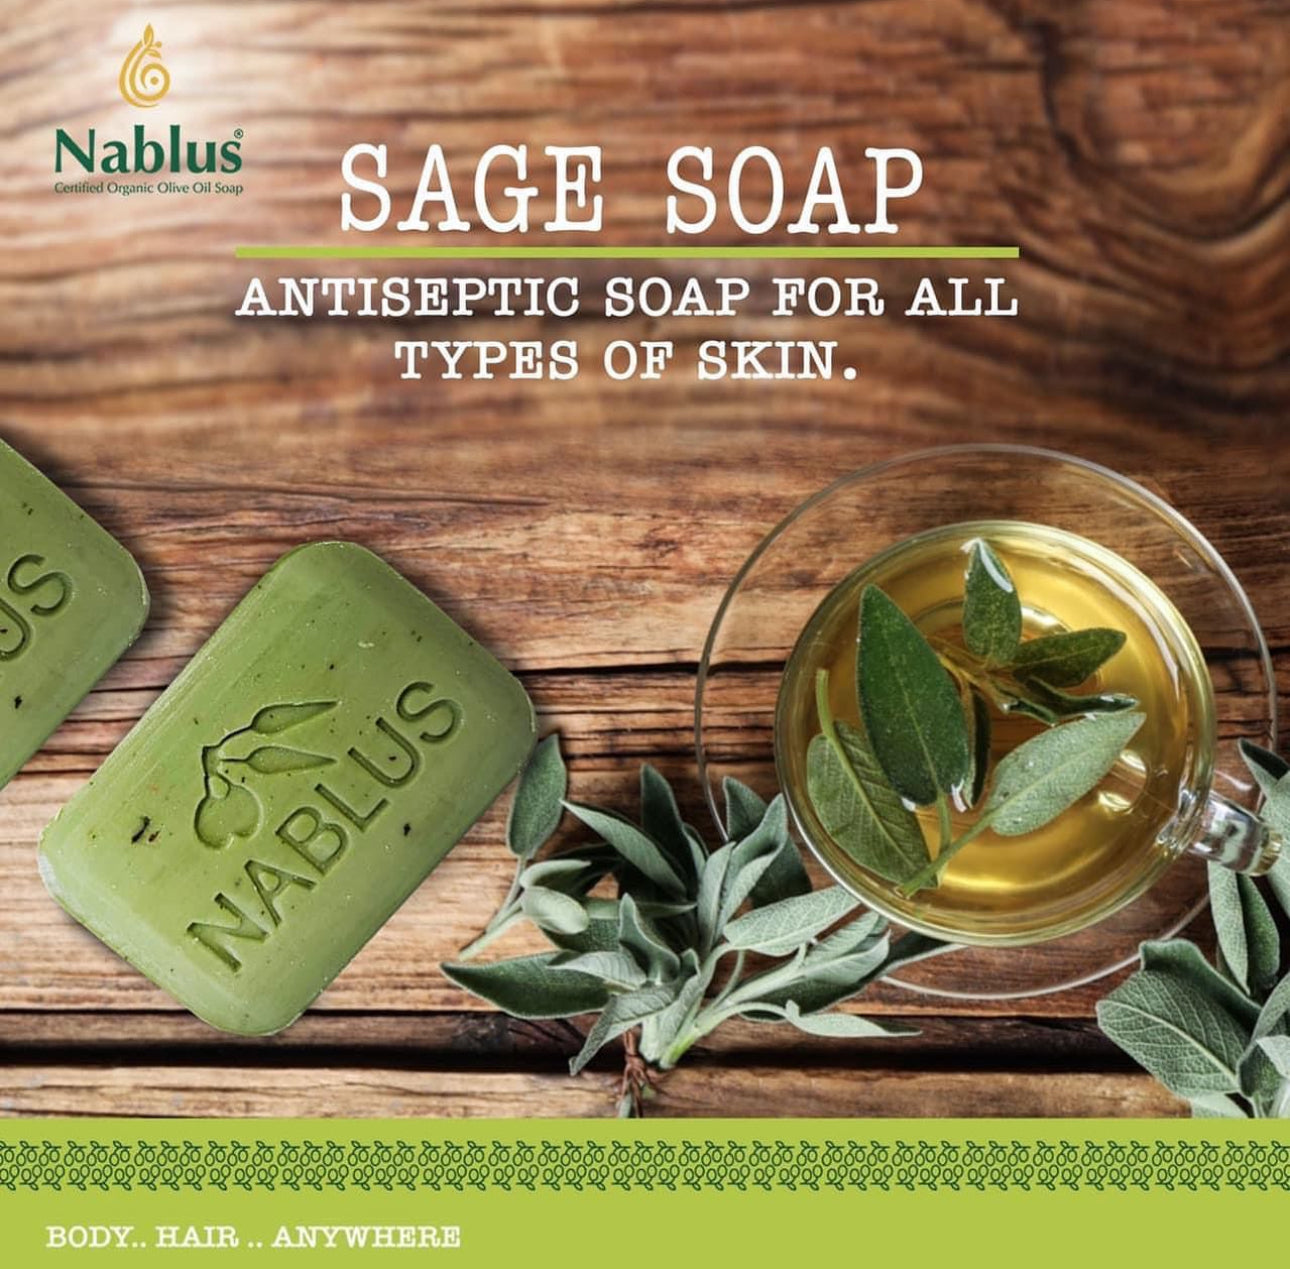 Organic Nablus Olive Oil Soap: Sage